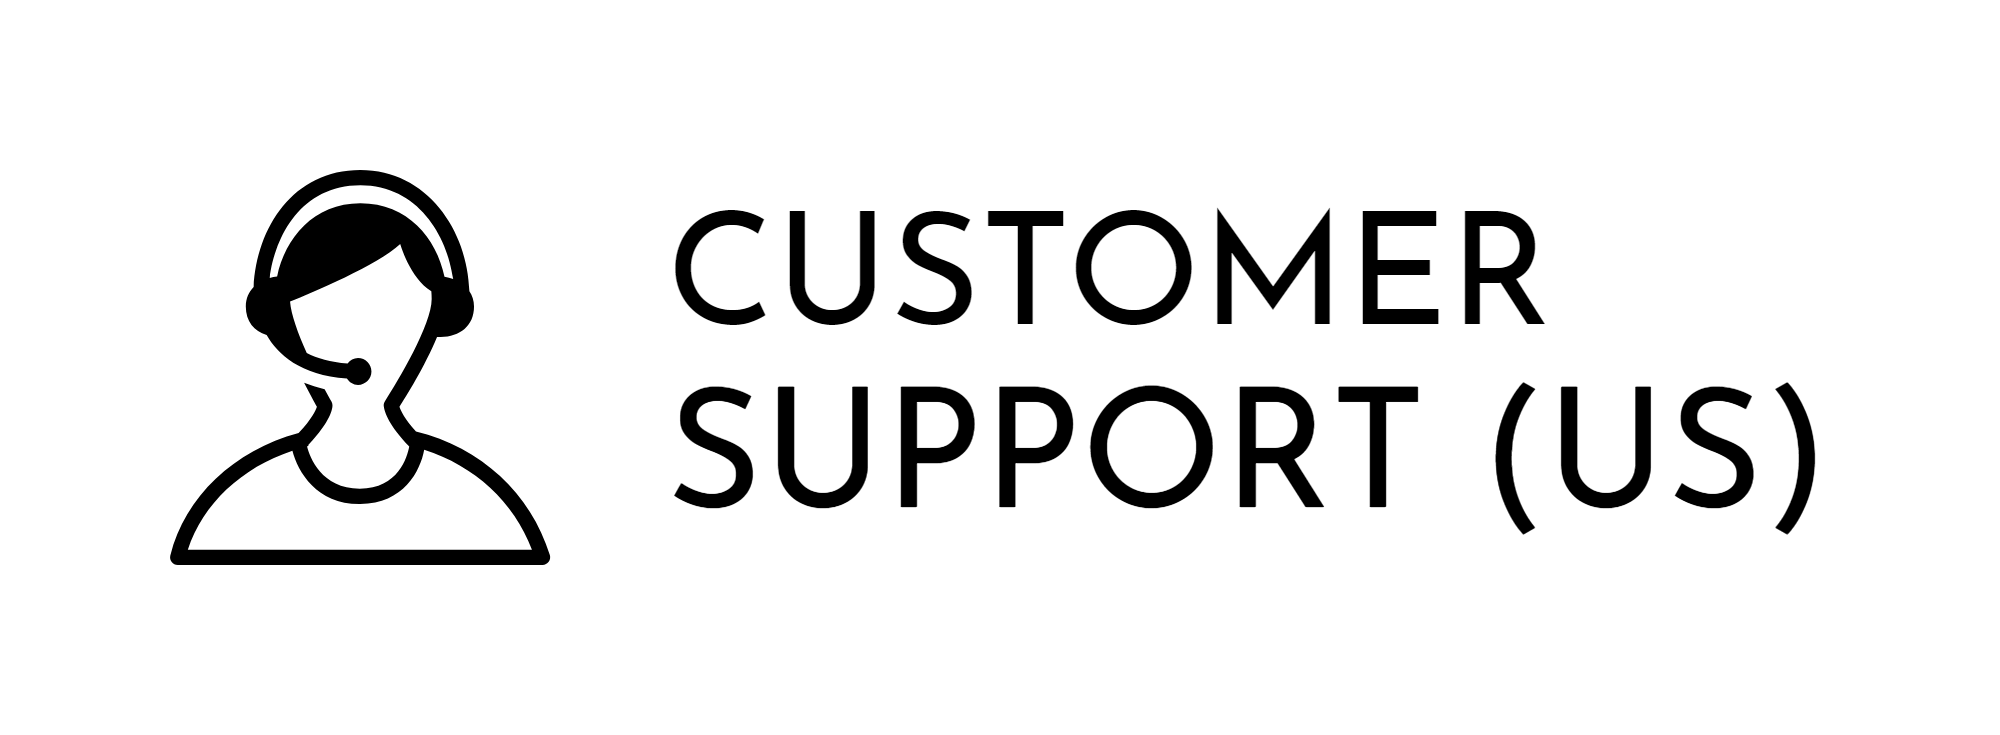 CUSTOMER-logo-black.png